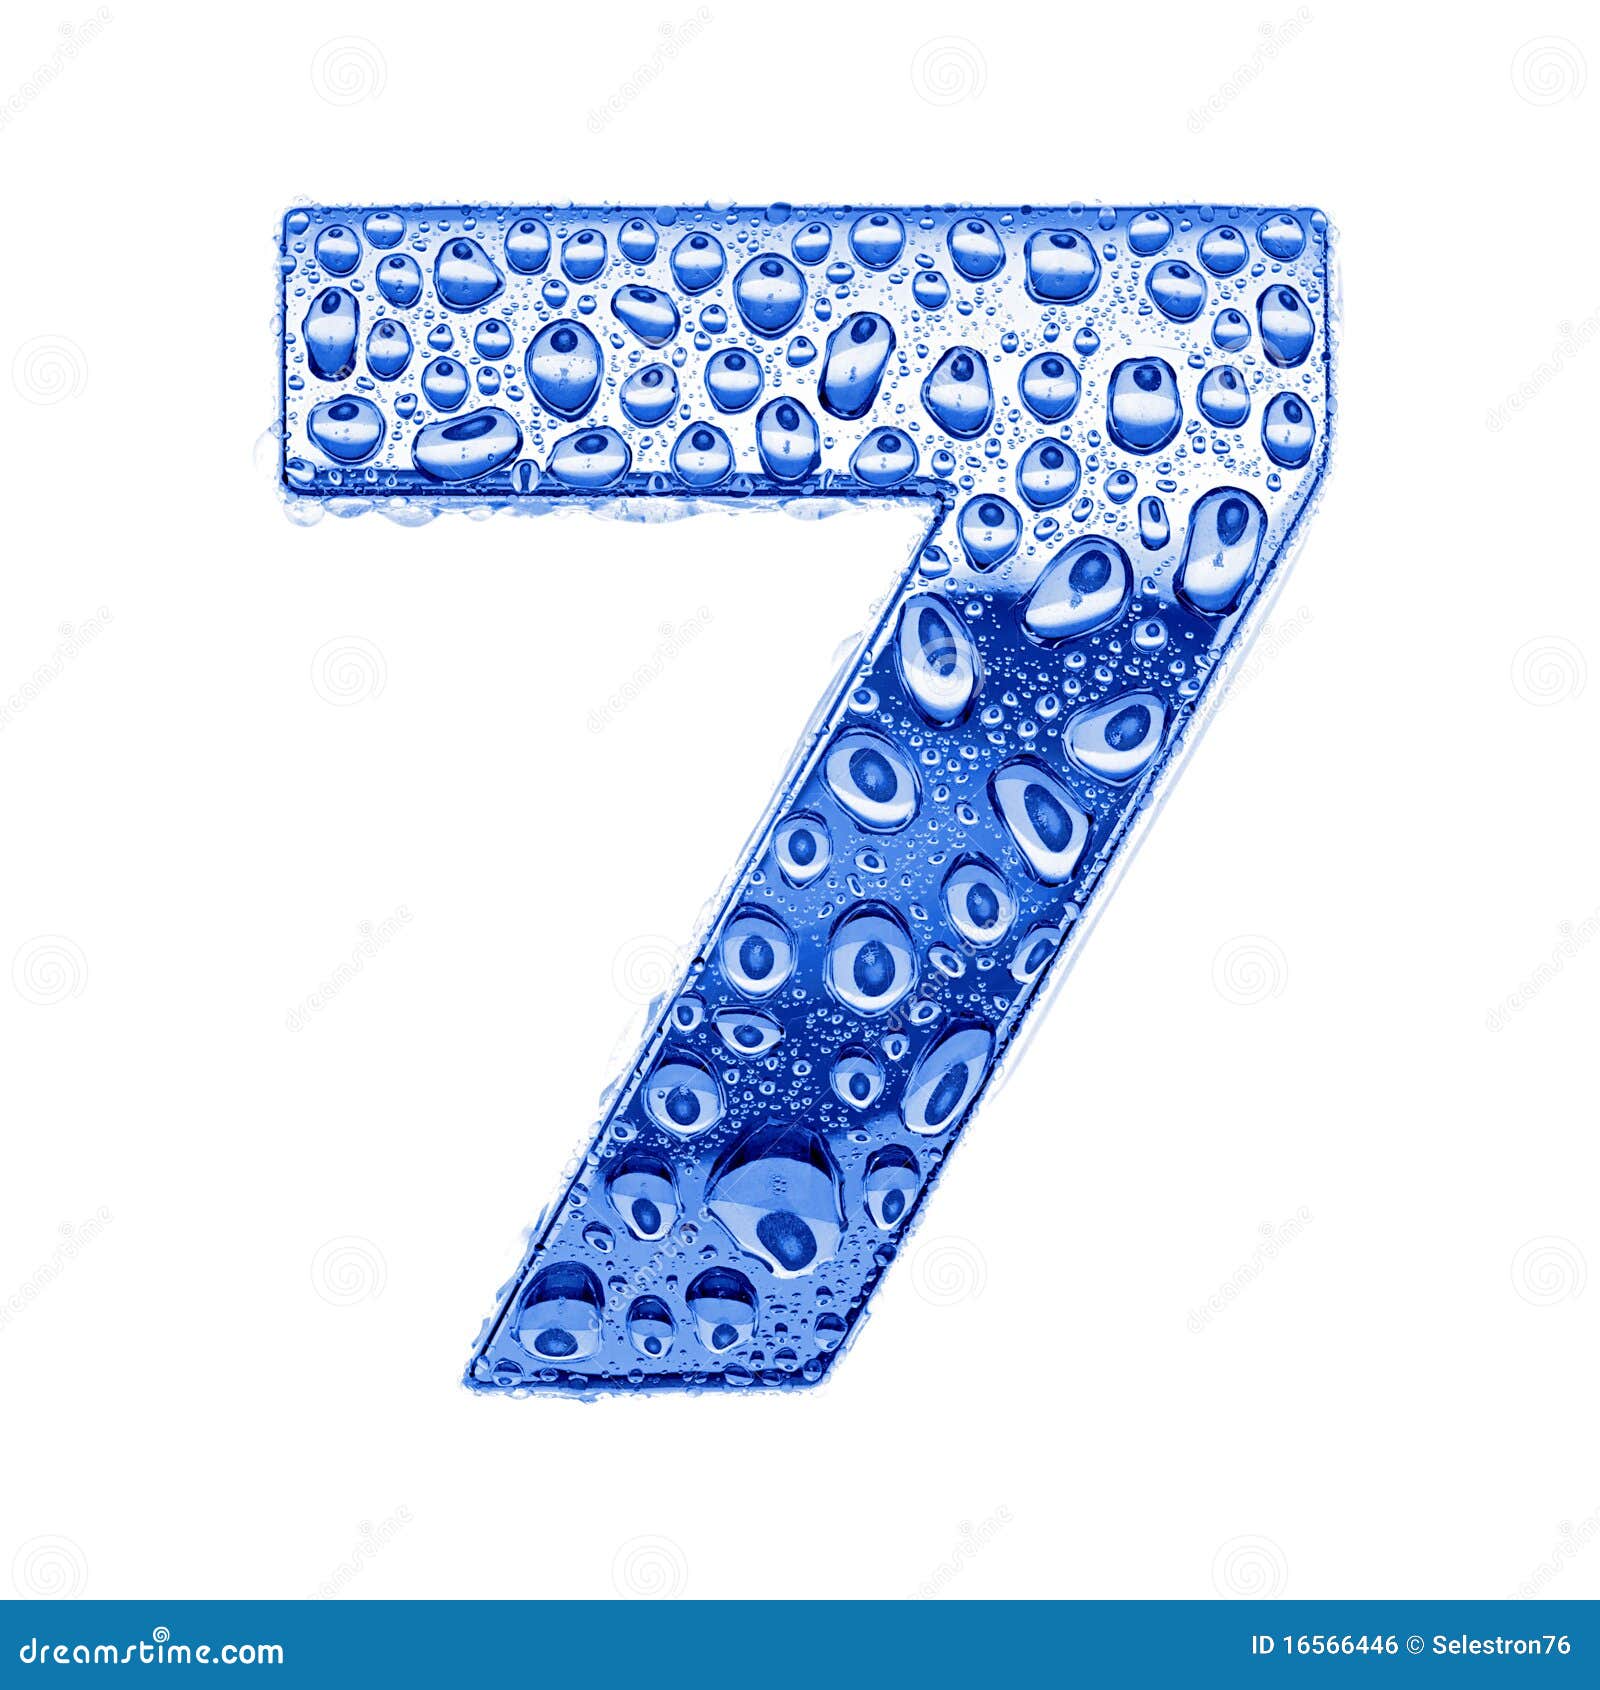 metal letter & water drops - digit 7